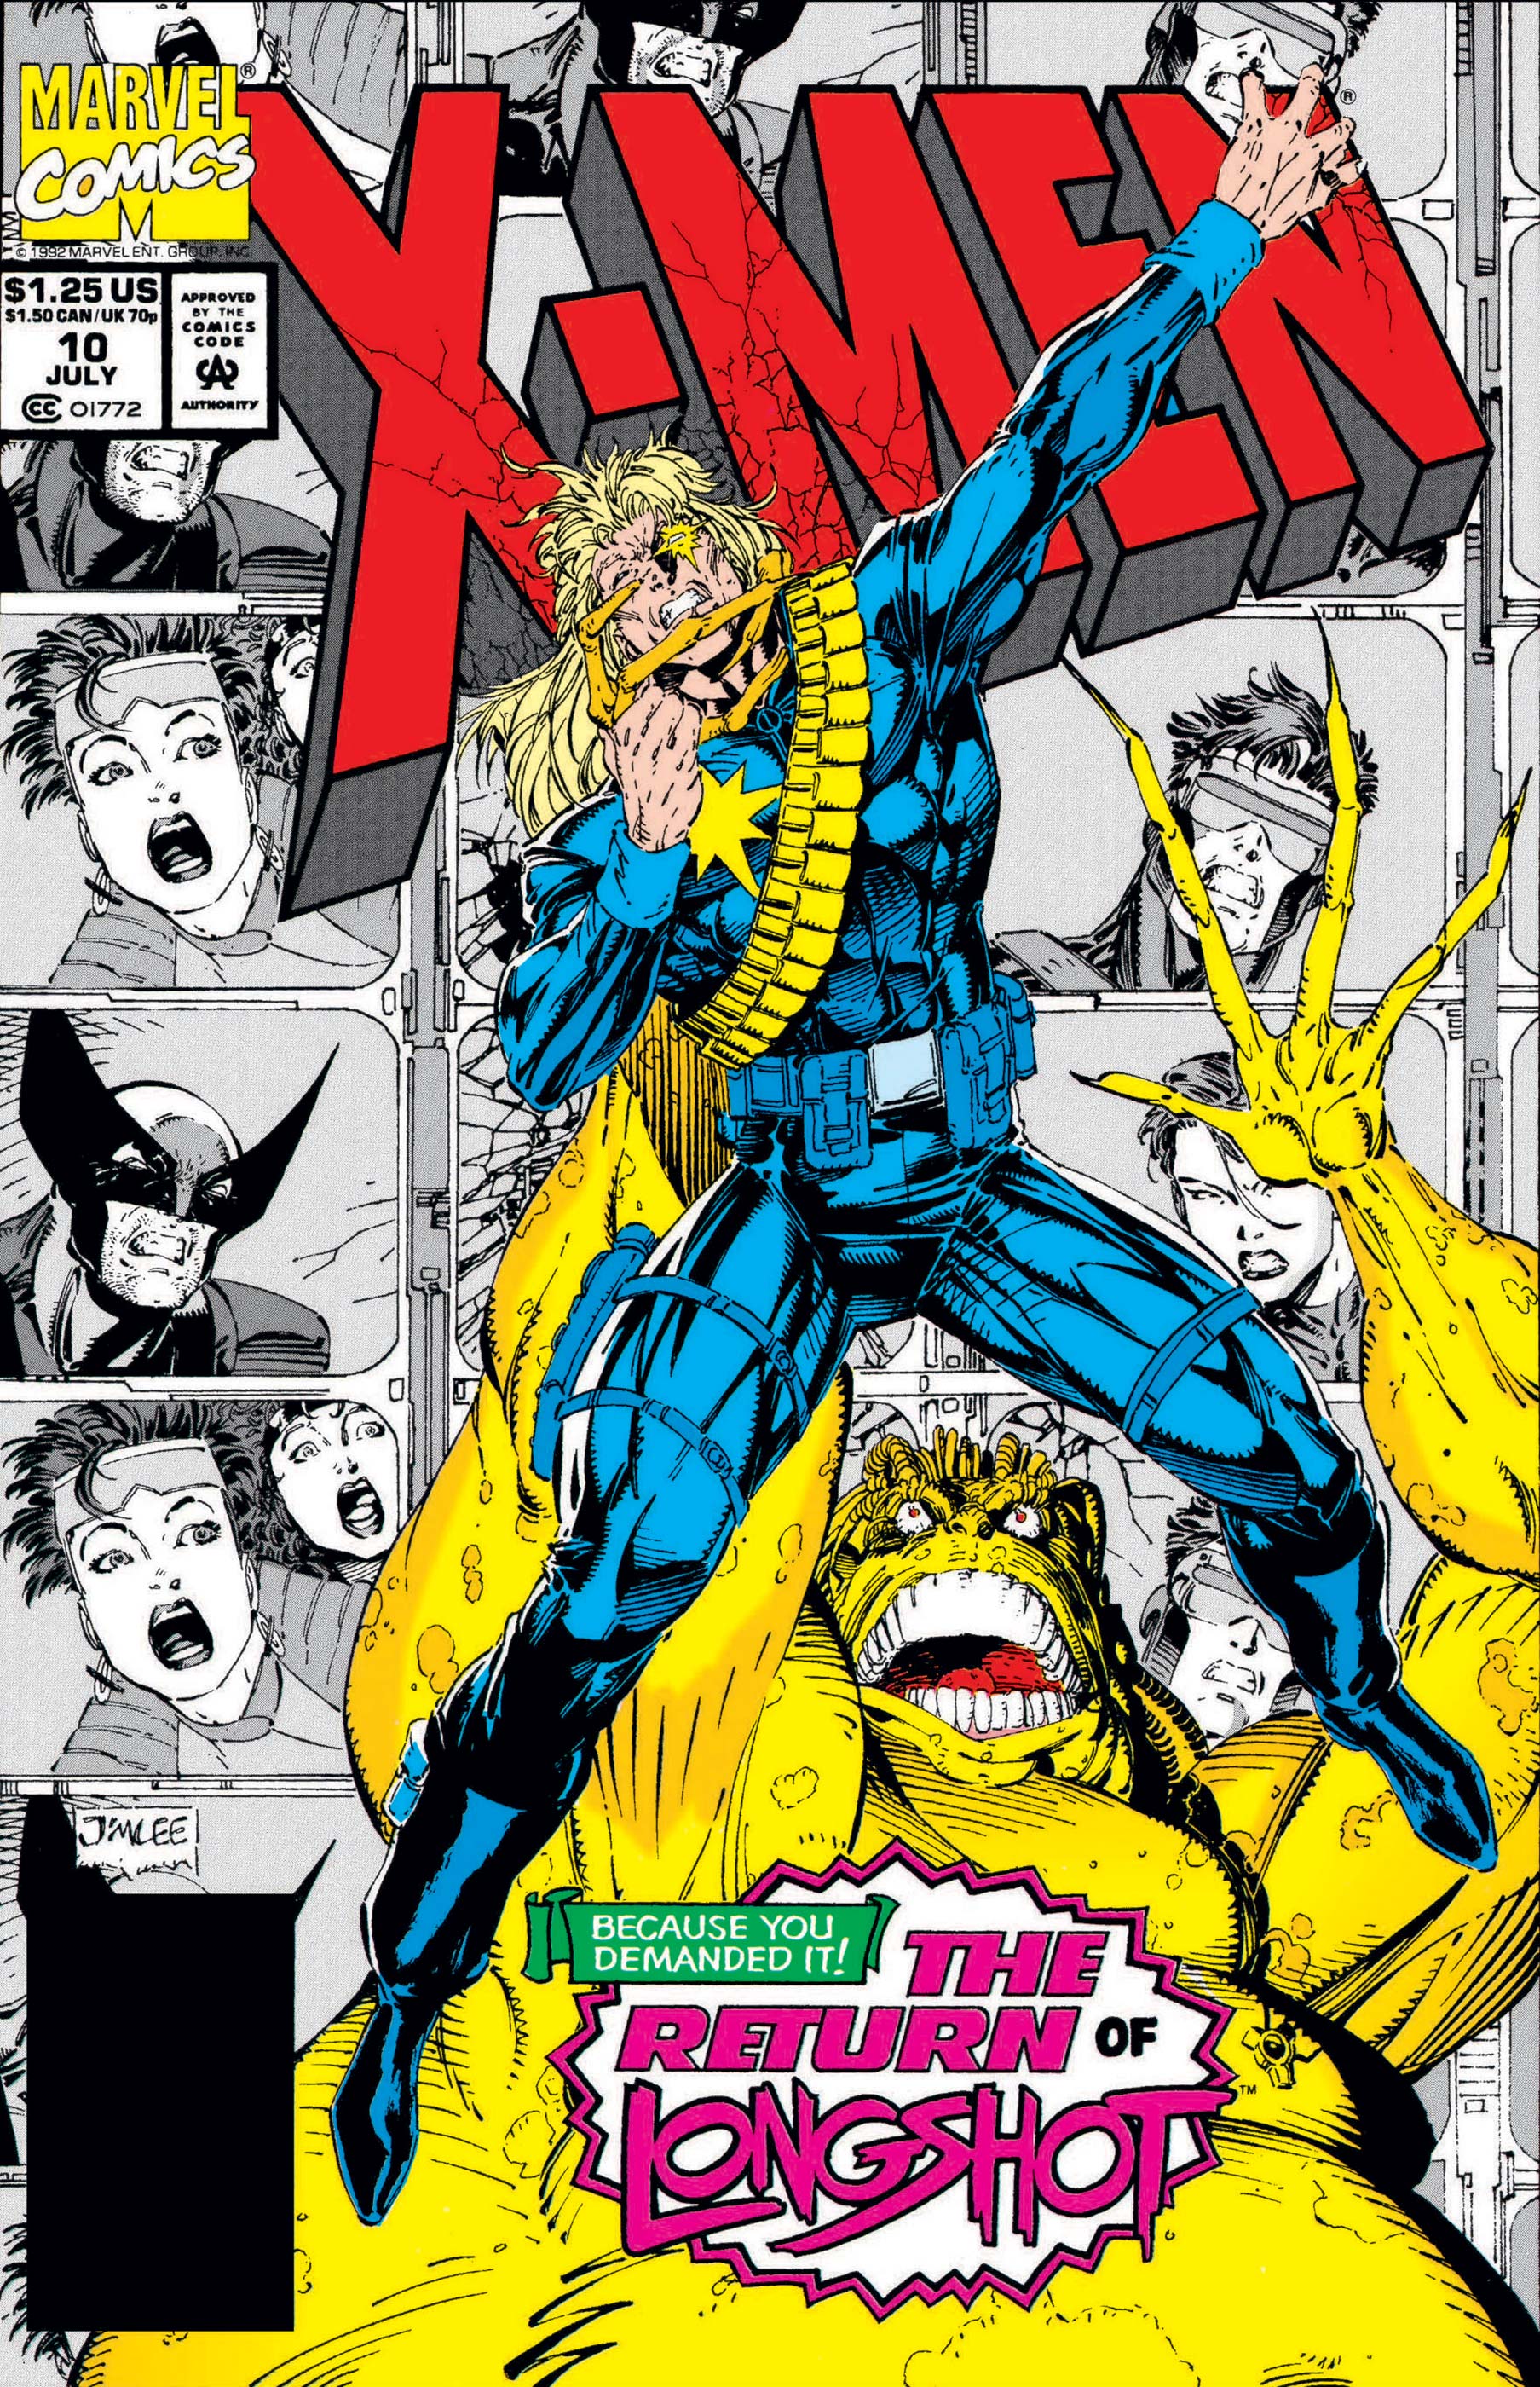 1998 Panini Comics X-Men 1. Serie Nr.18